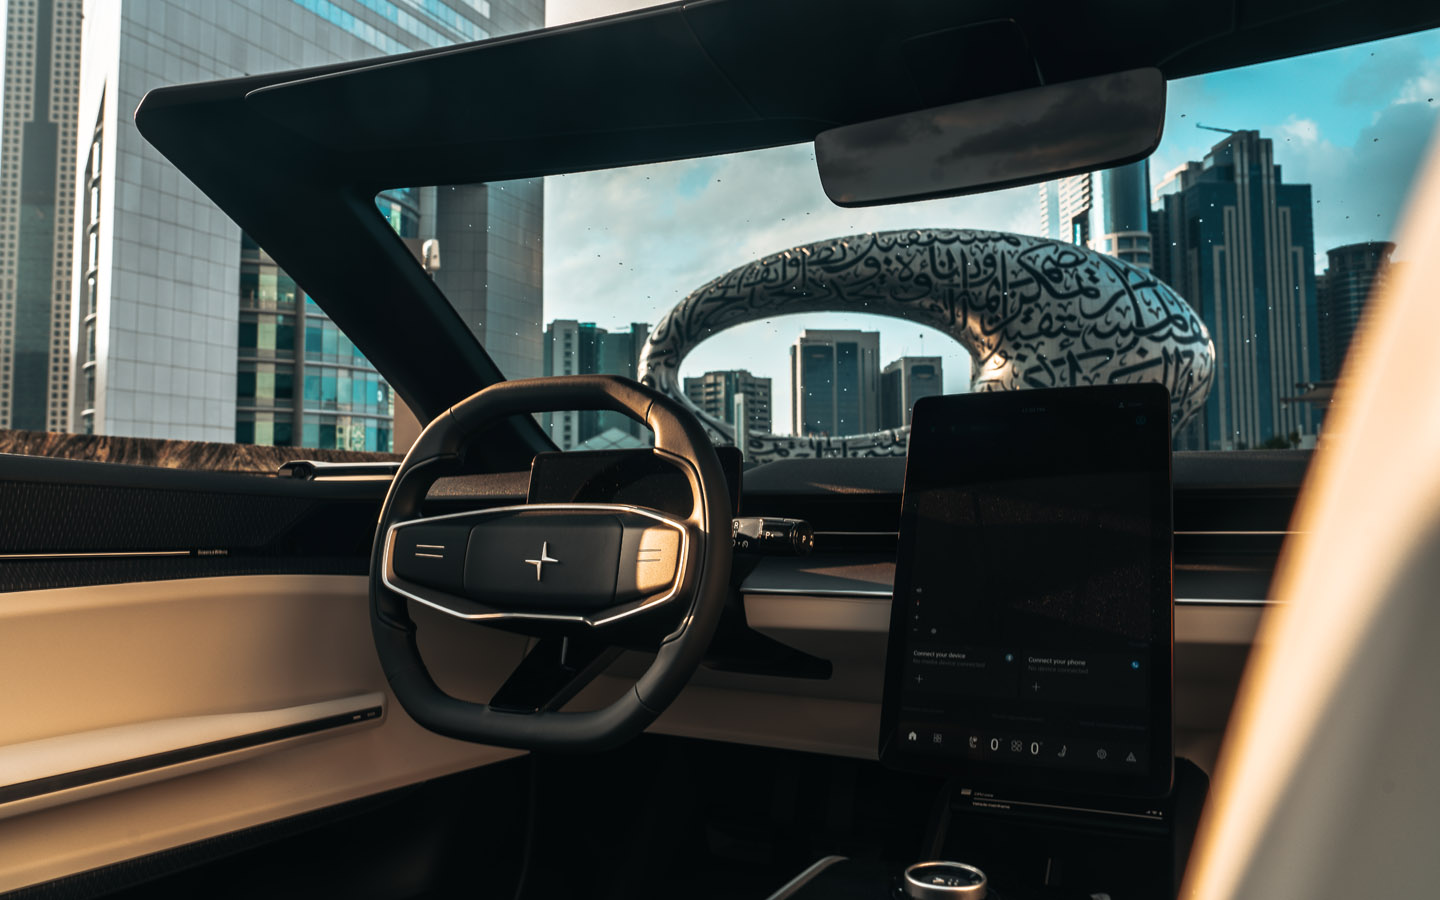 polestar interior steering and screen